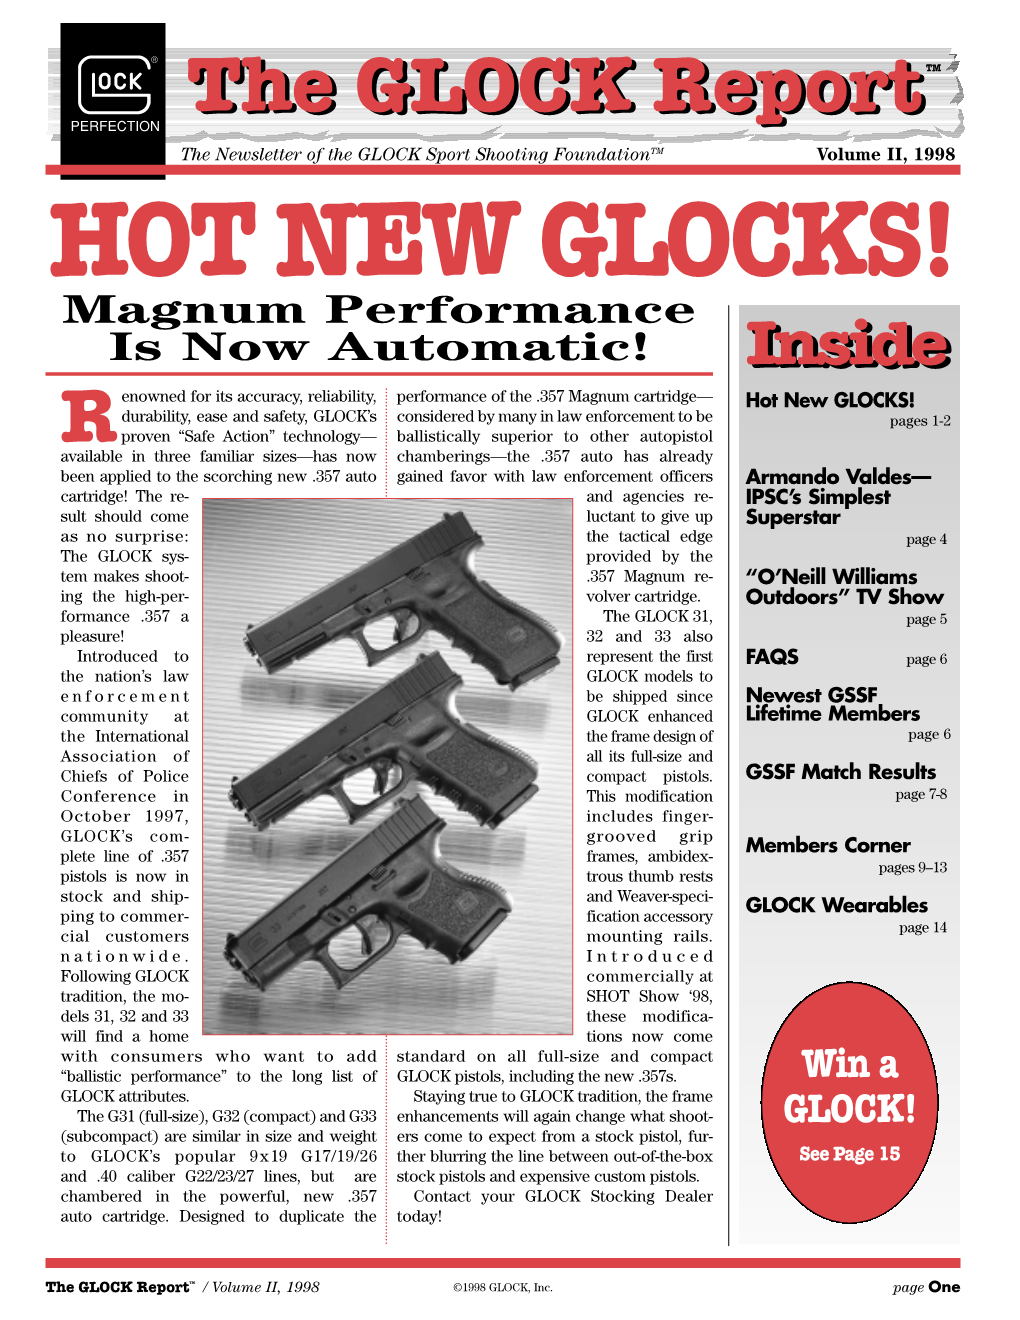 Hot New Glocks!